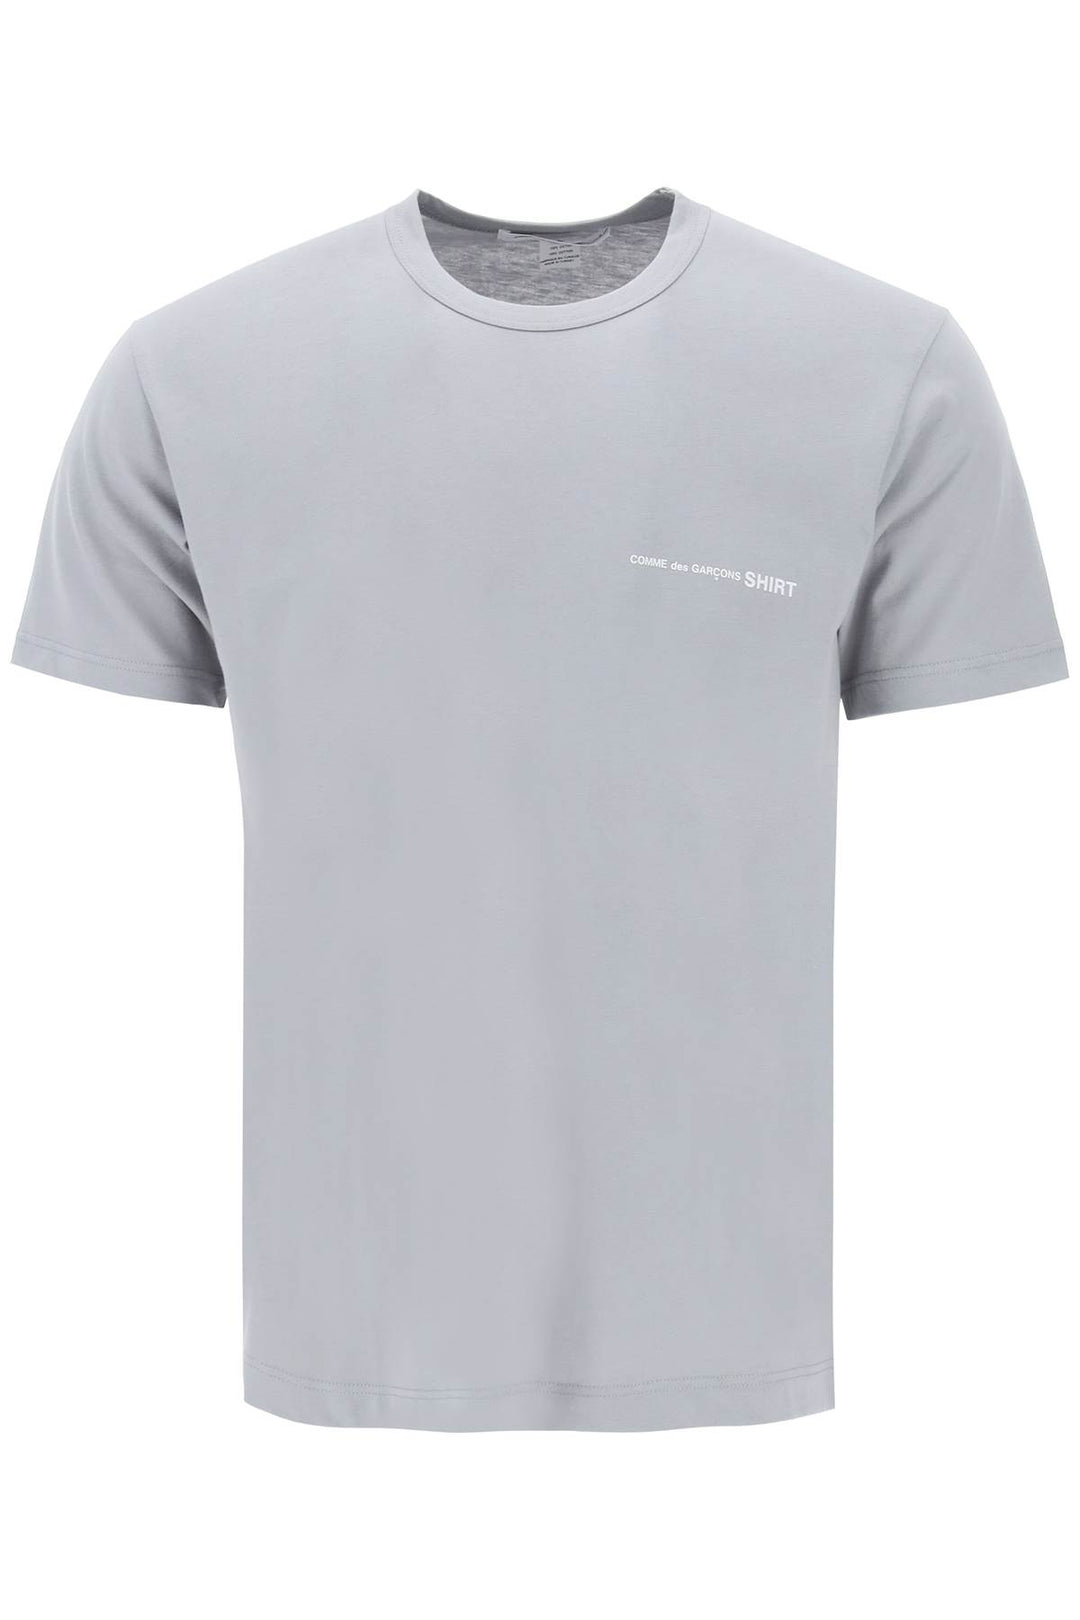 Comme Des Garcons Shirt Logo Print T Shirt   Grigio